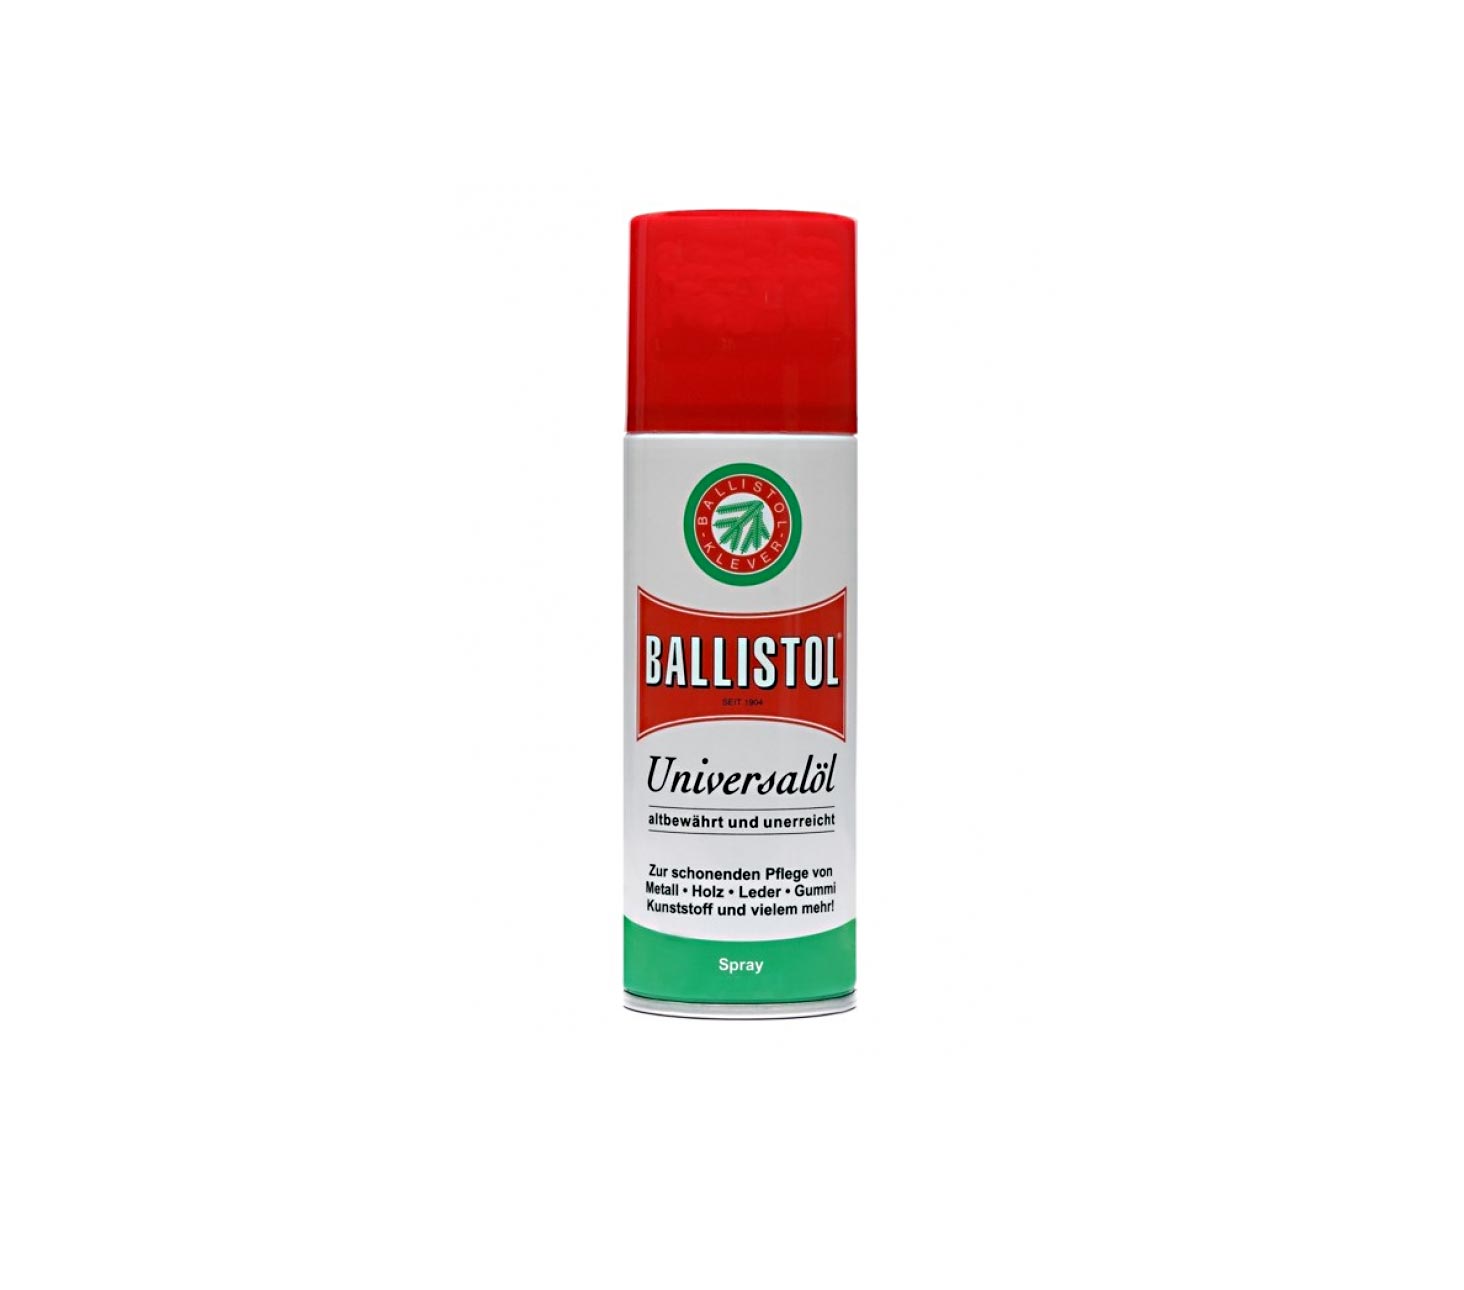 oil ballistol spray 50 ml ce3d2eadcf5244a2b082a46dcf7faf3f be4d97bd